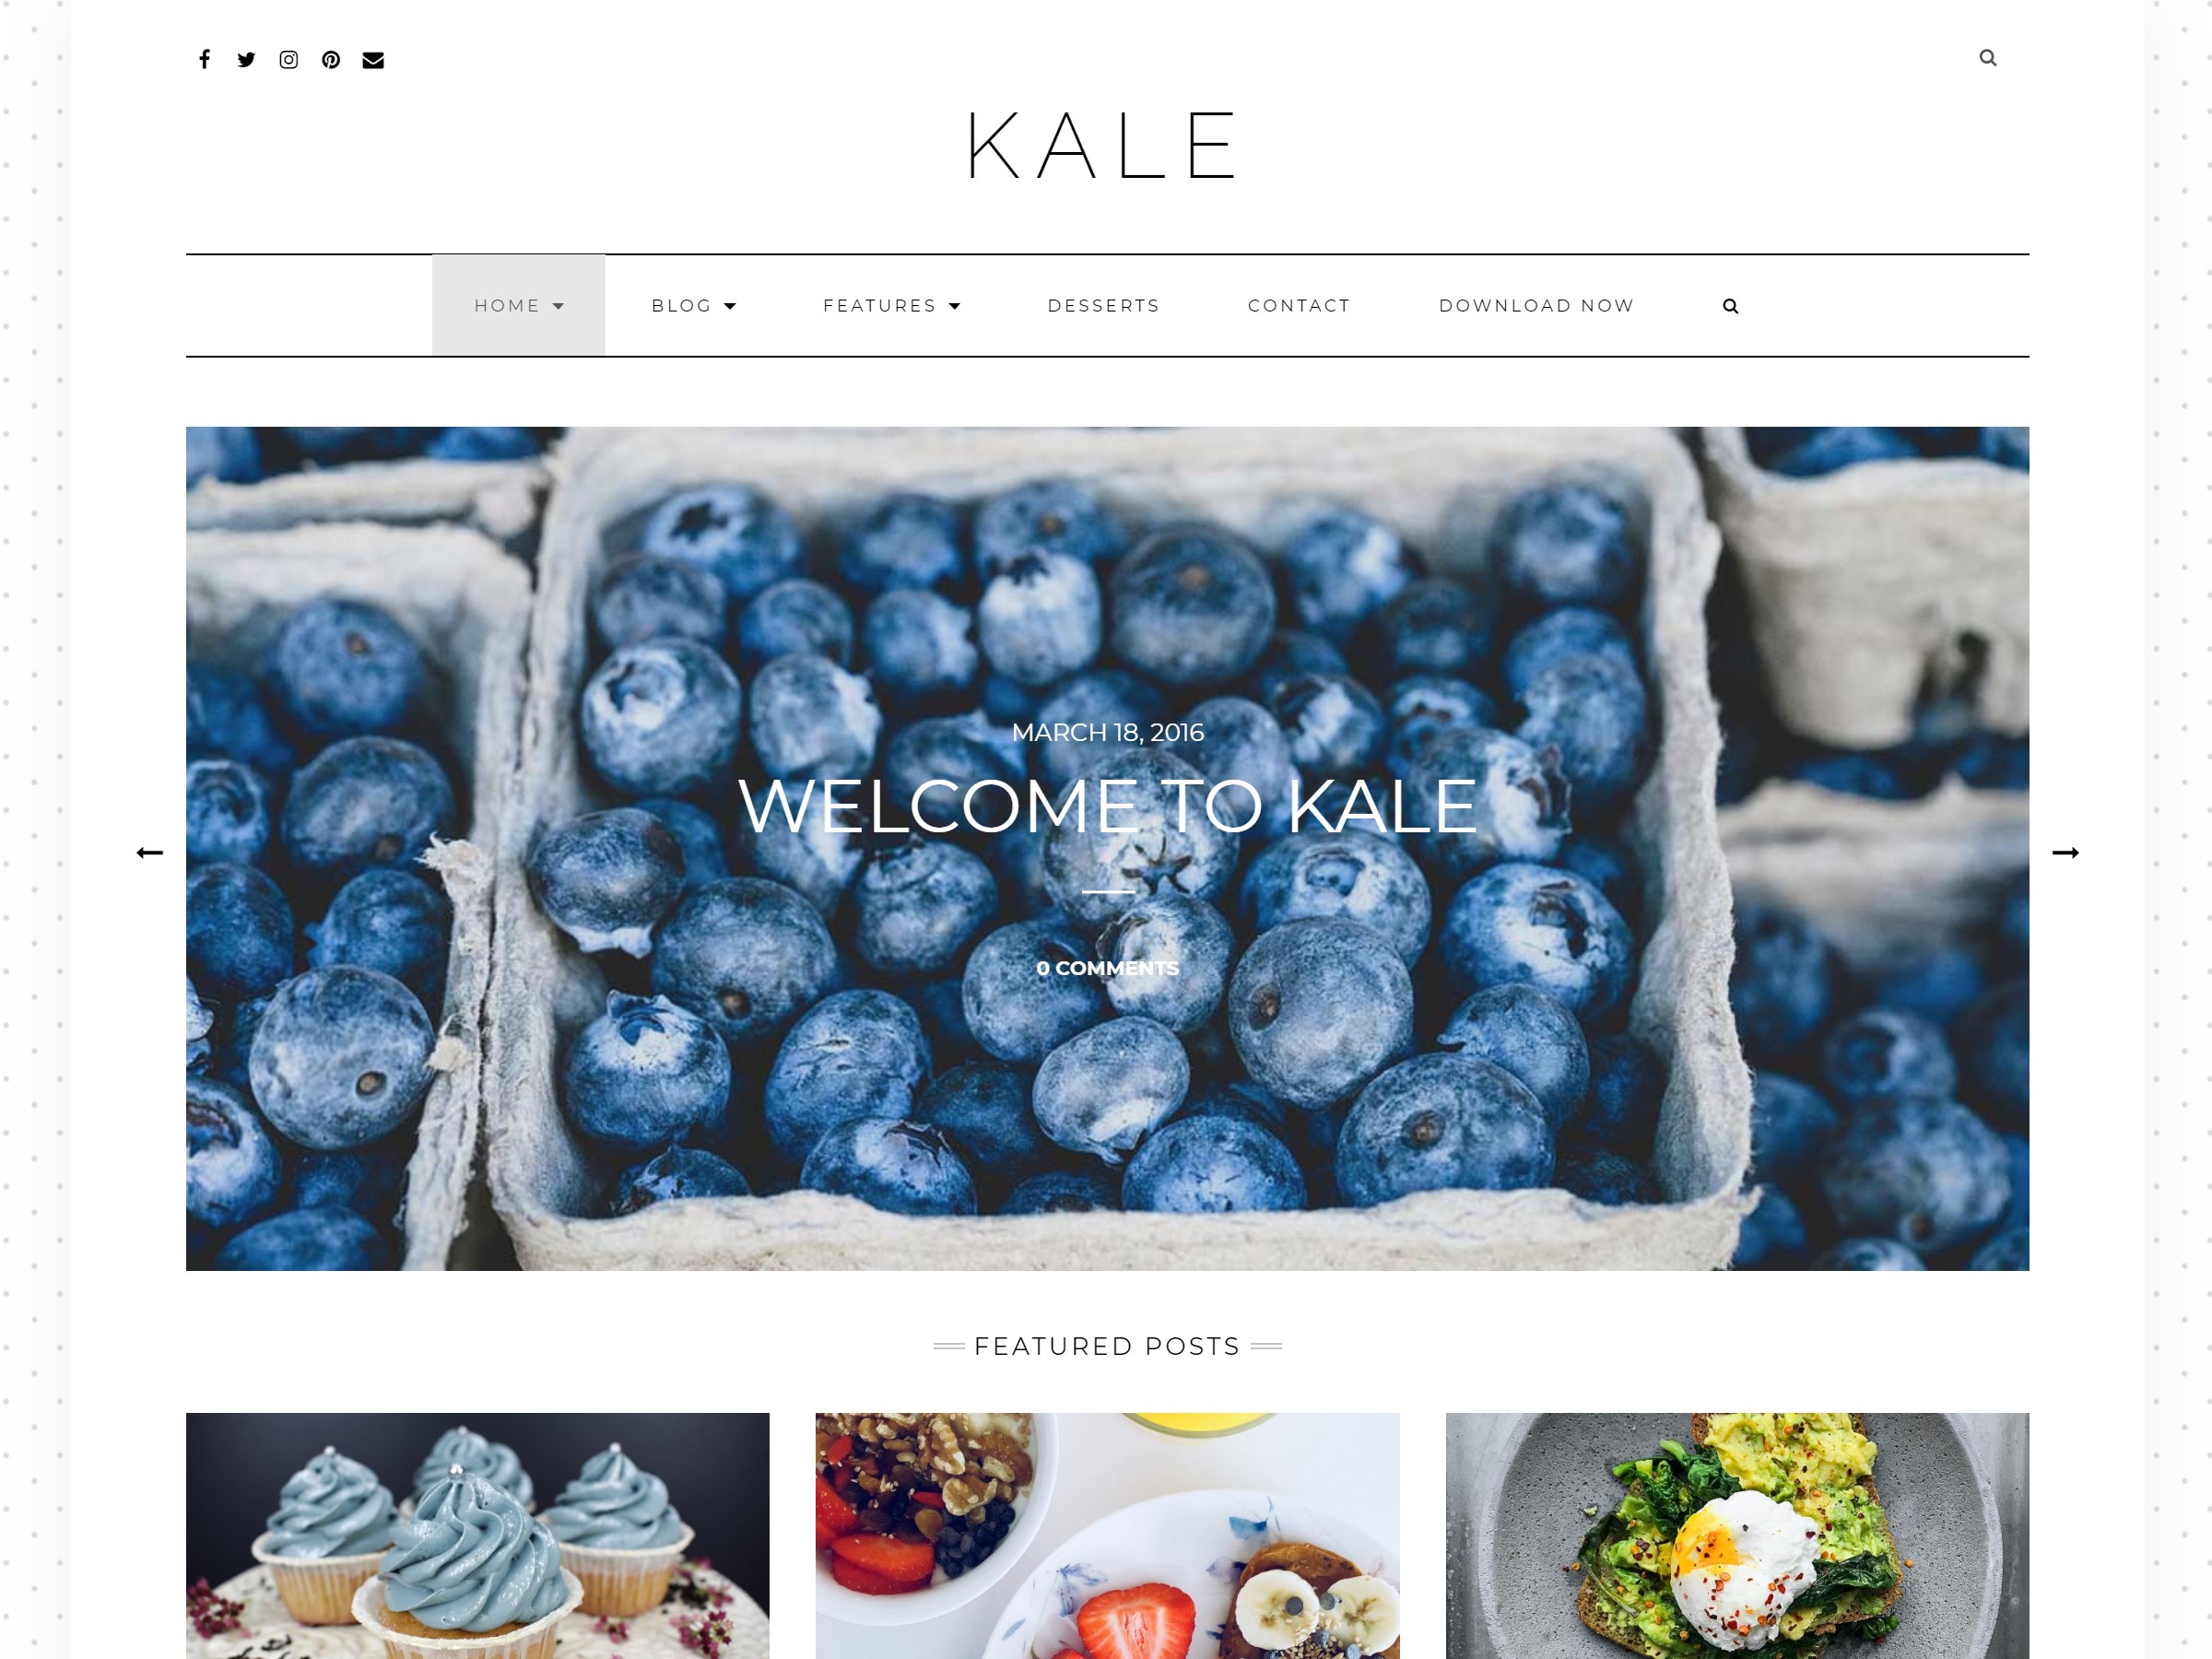 Kale website example screenshot